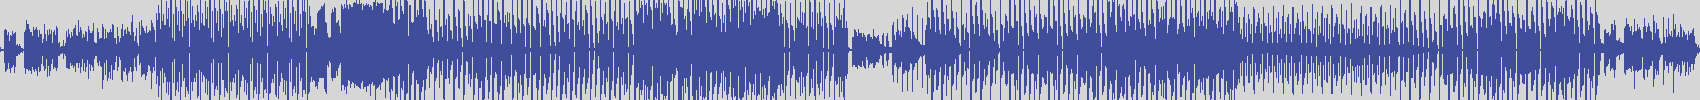 nf_boyz_records [NFY081] James Altura - Blue Hawk [S Type Mix] audio wave form